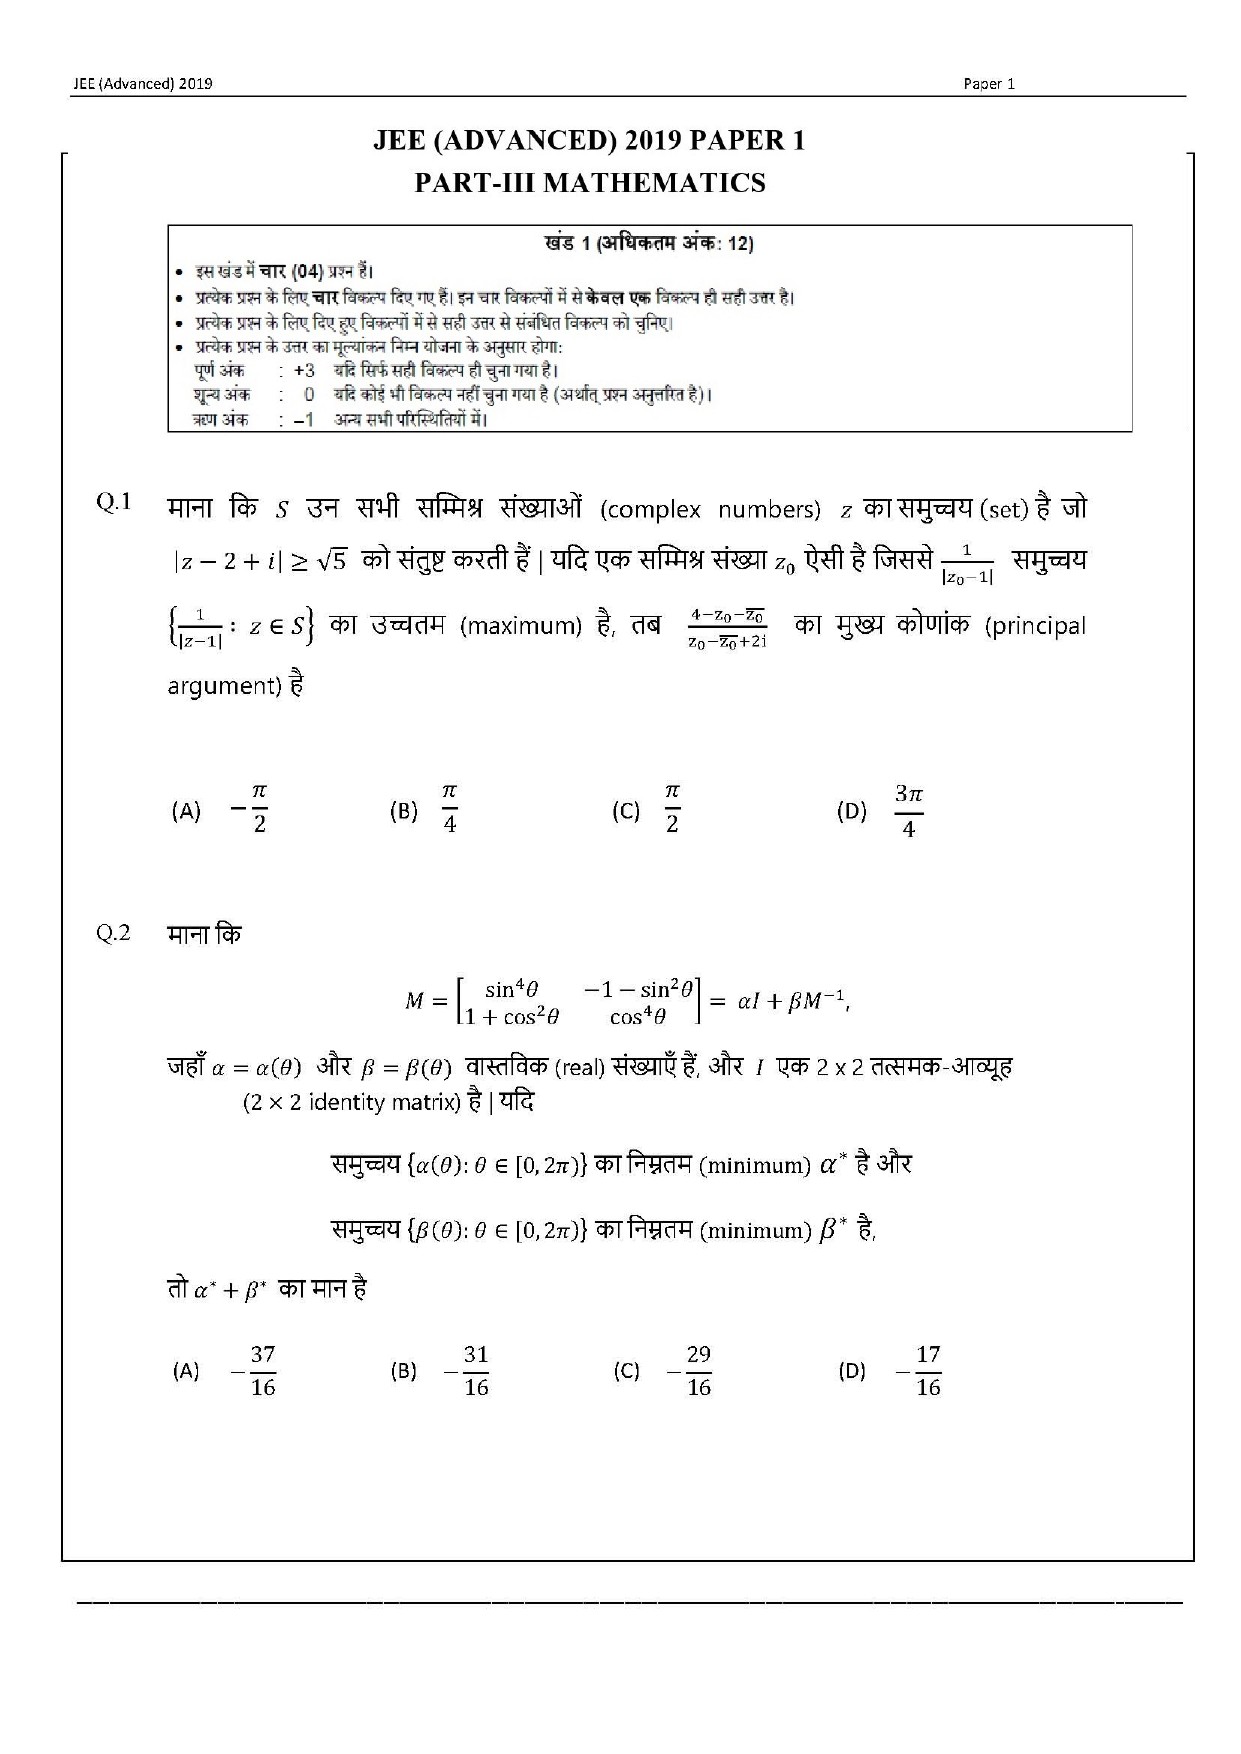 JEE Advanced Hindi Question Paper 2019 Paper 1 Mathematics 1